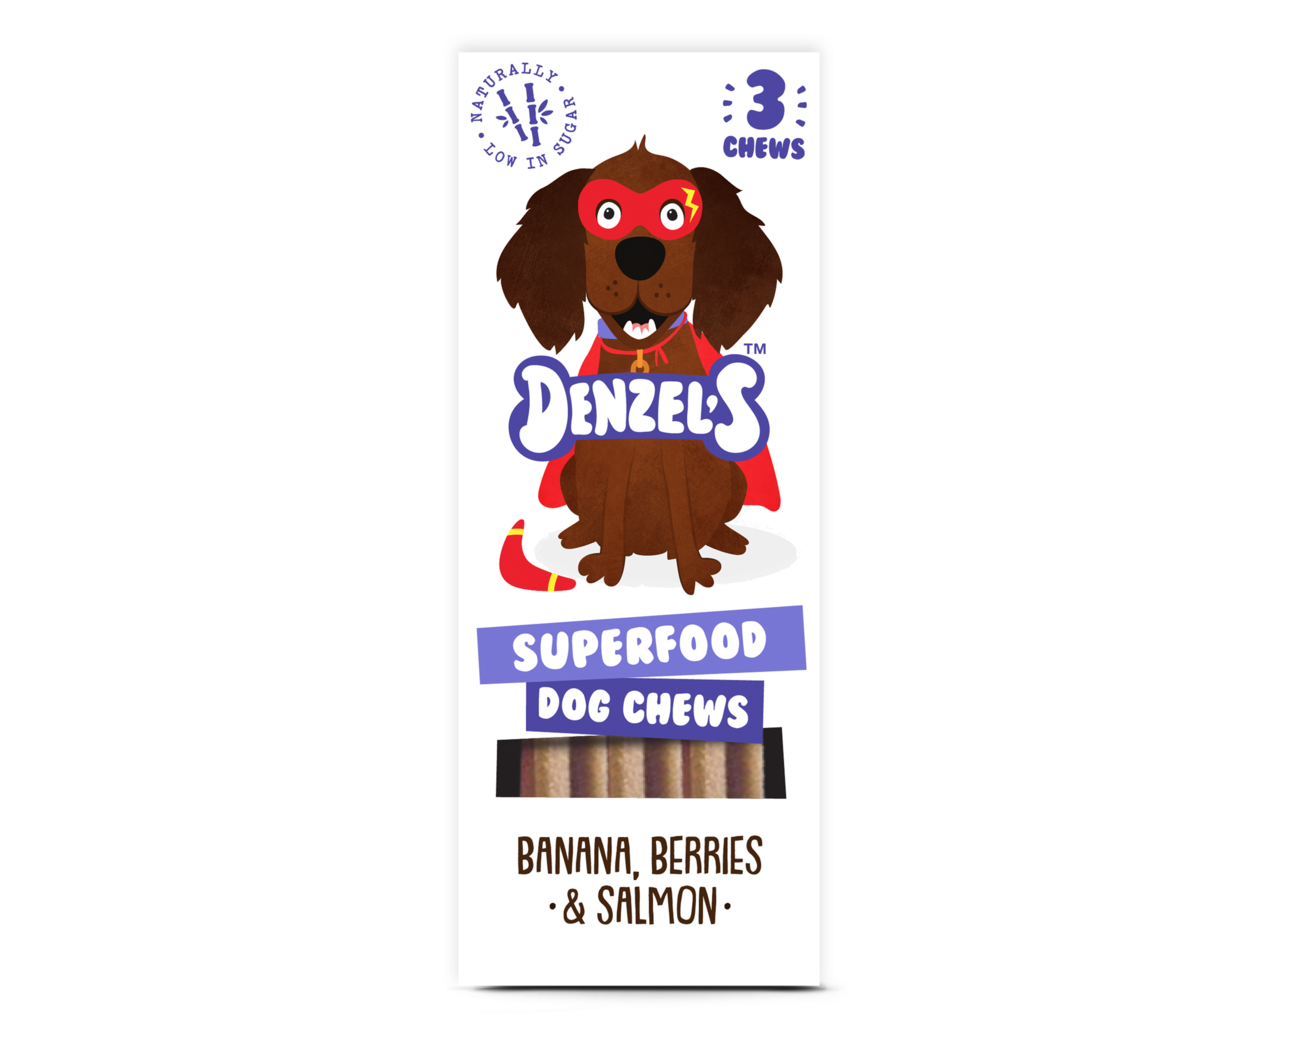 Denzels Dog Chews